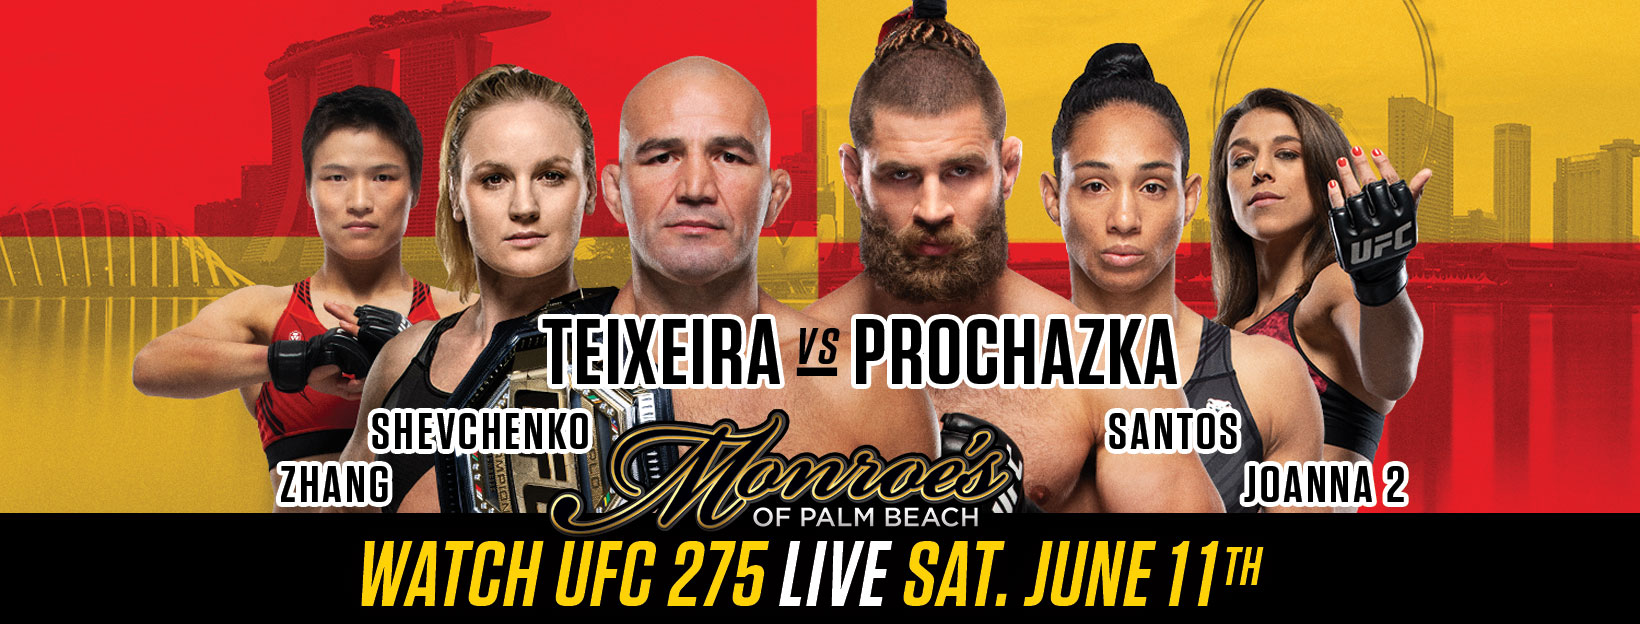 UFC 275 Teixeira vs. Prochazka LIVE PPV - Monroe's Palm Beach June 11th